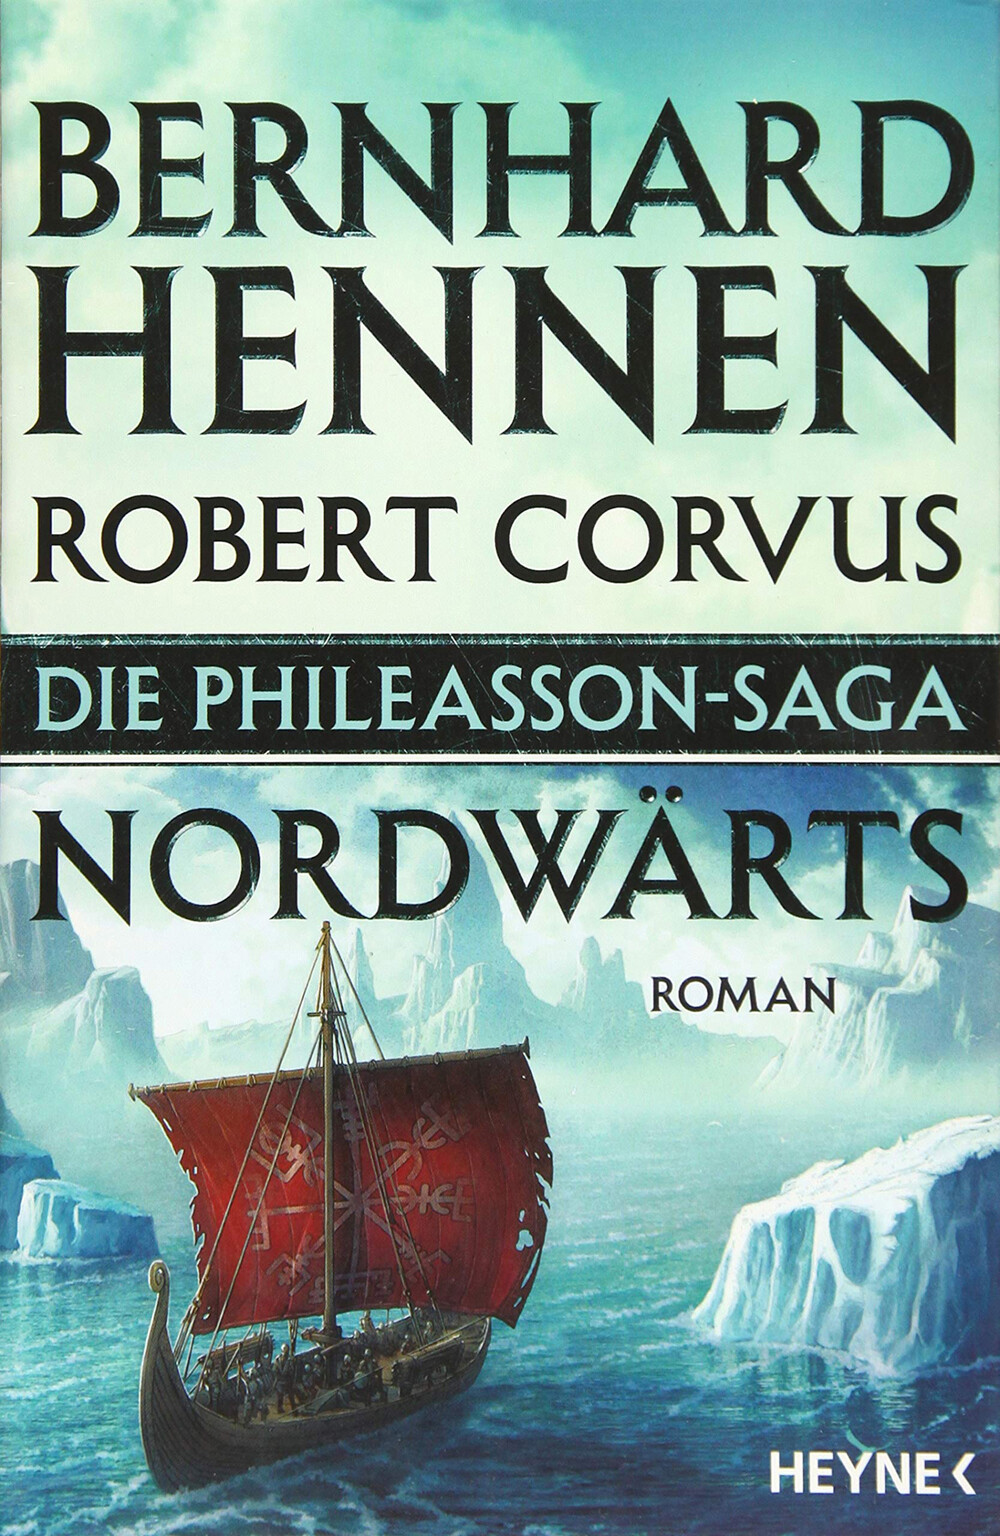 Die Phileasson-Saga Book One -  Nordwärts Cover Layout